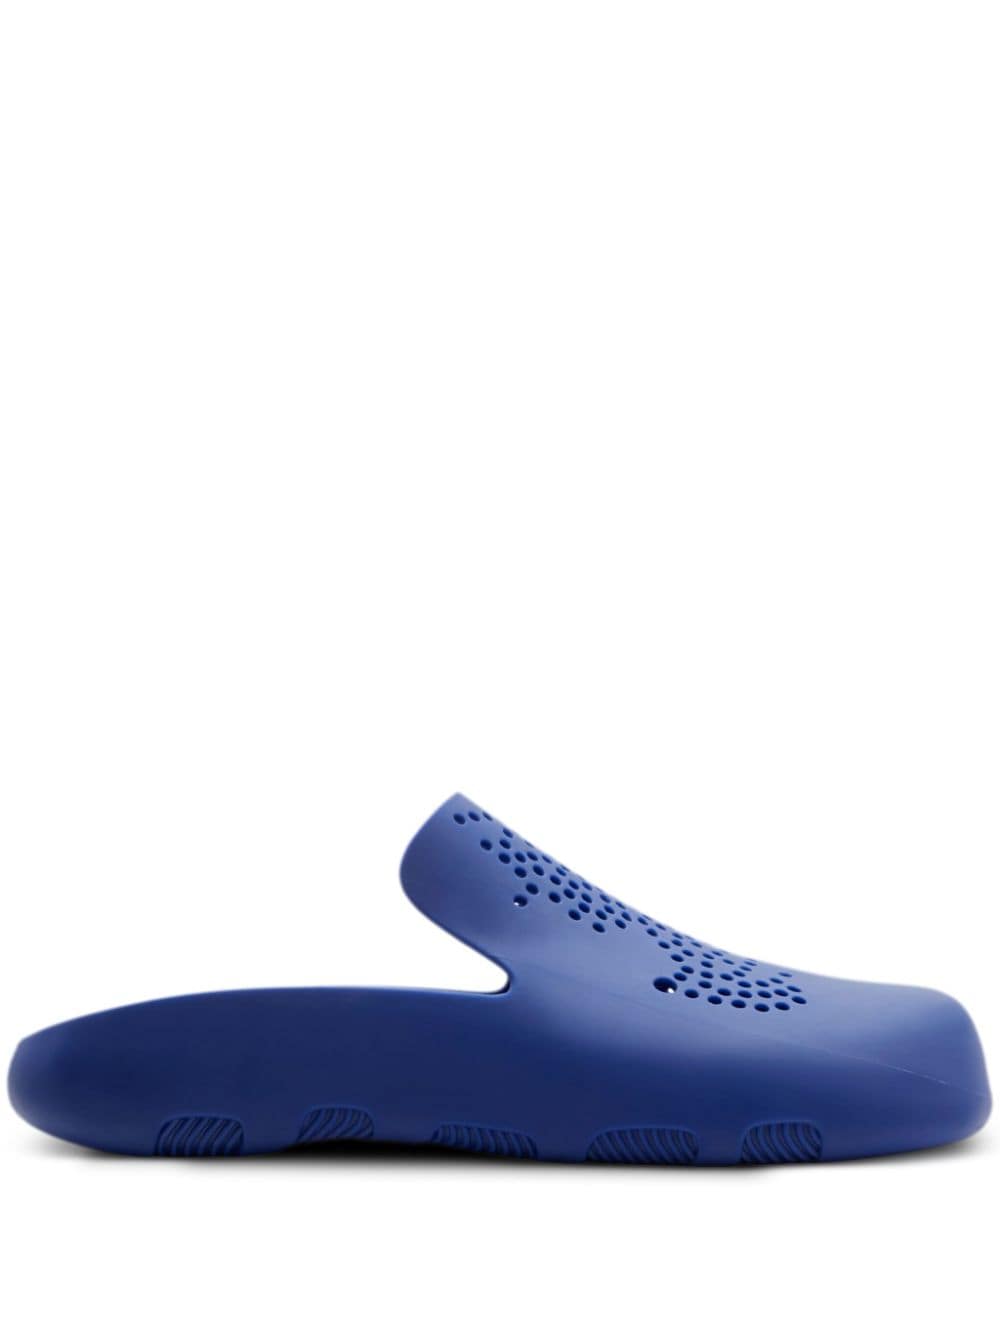 Burberry Stingray geperforeerde slippers - Blauw